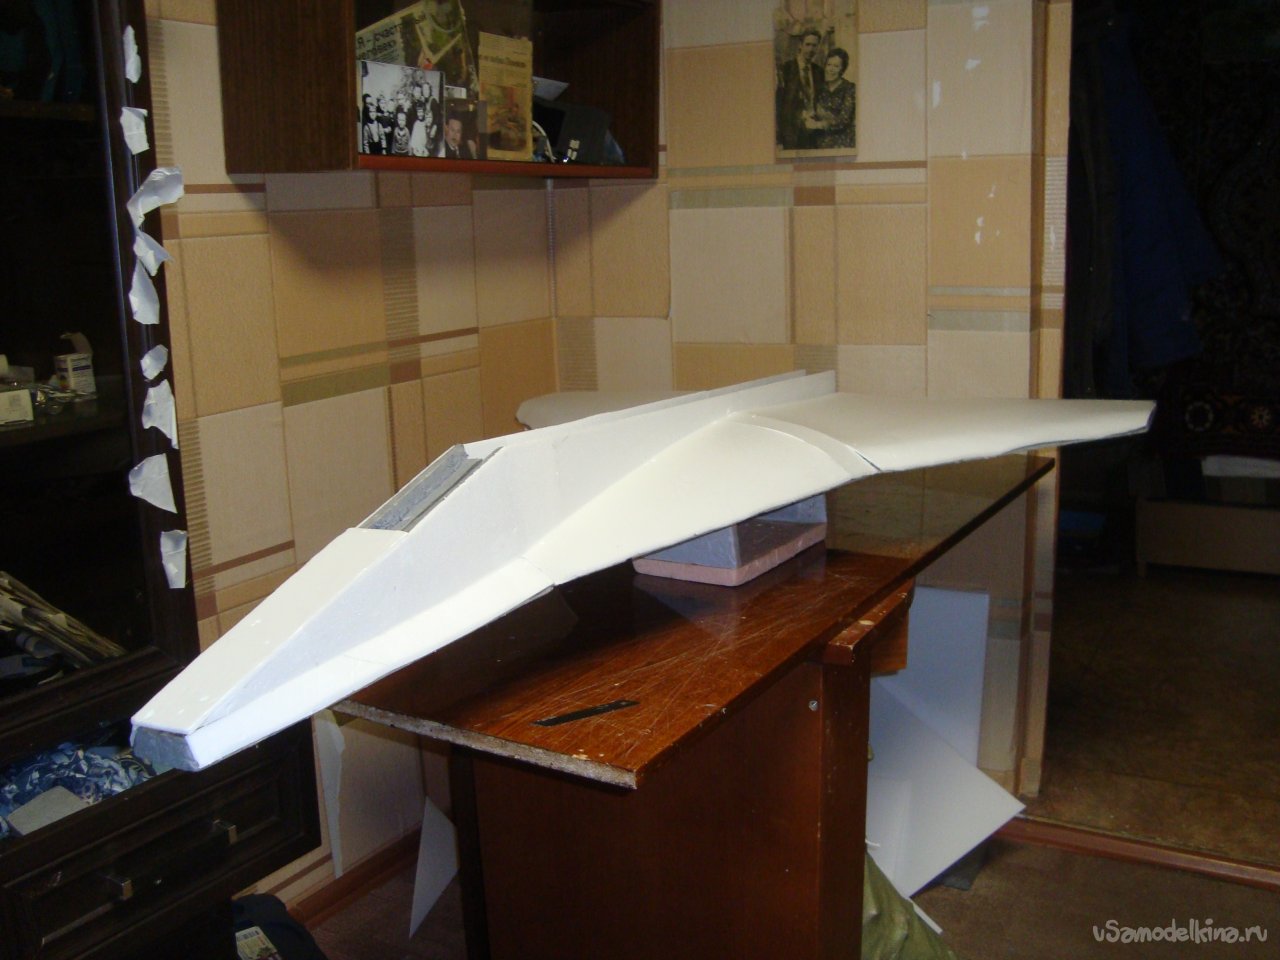 Модификация авиамодели «ADRON»  С-01